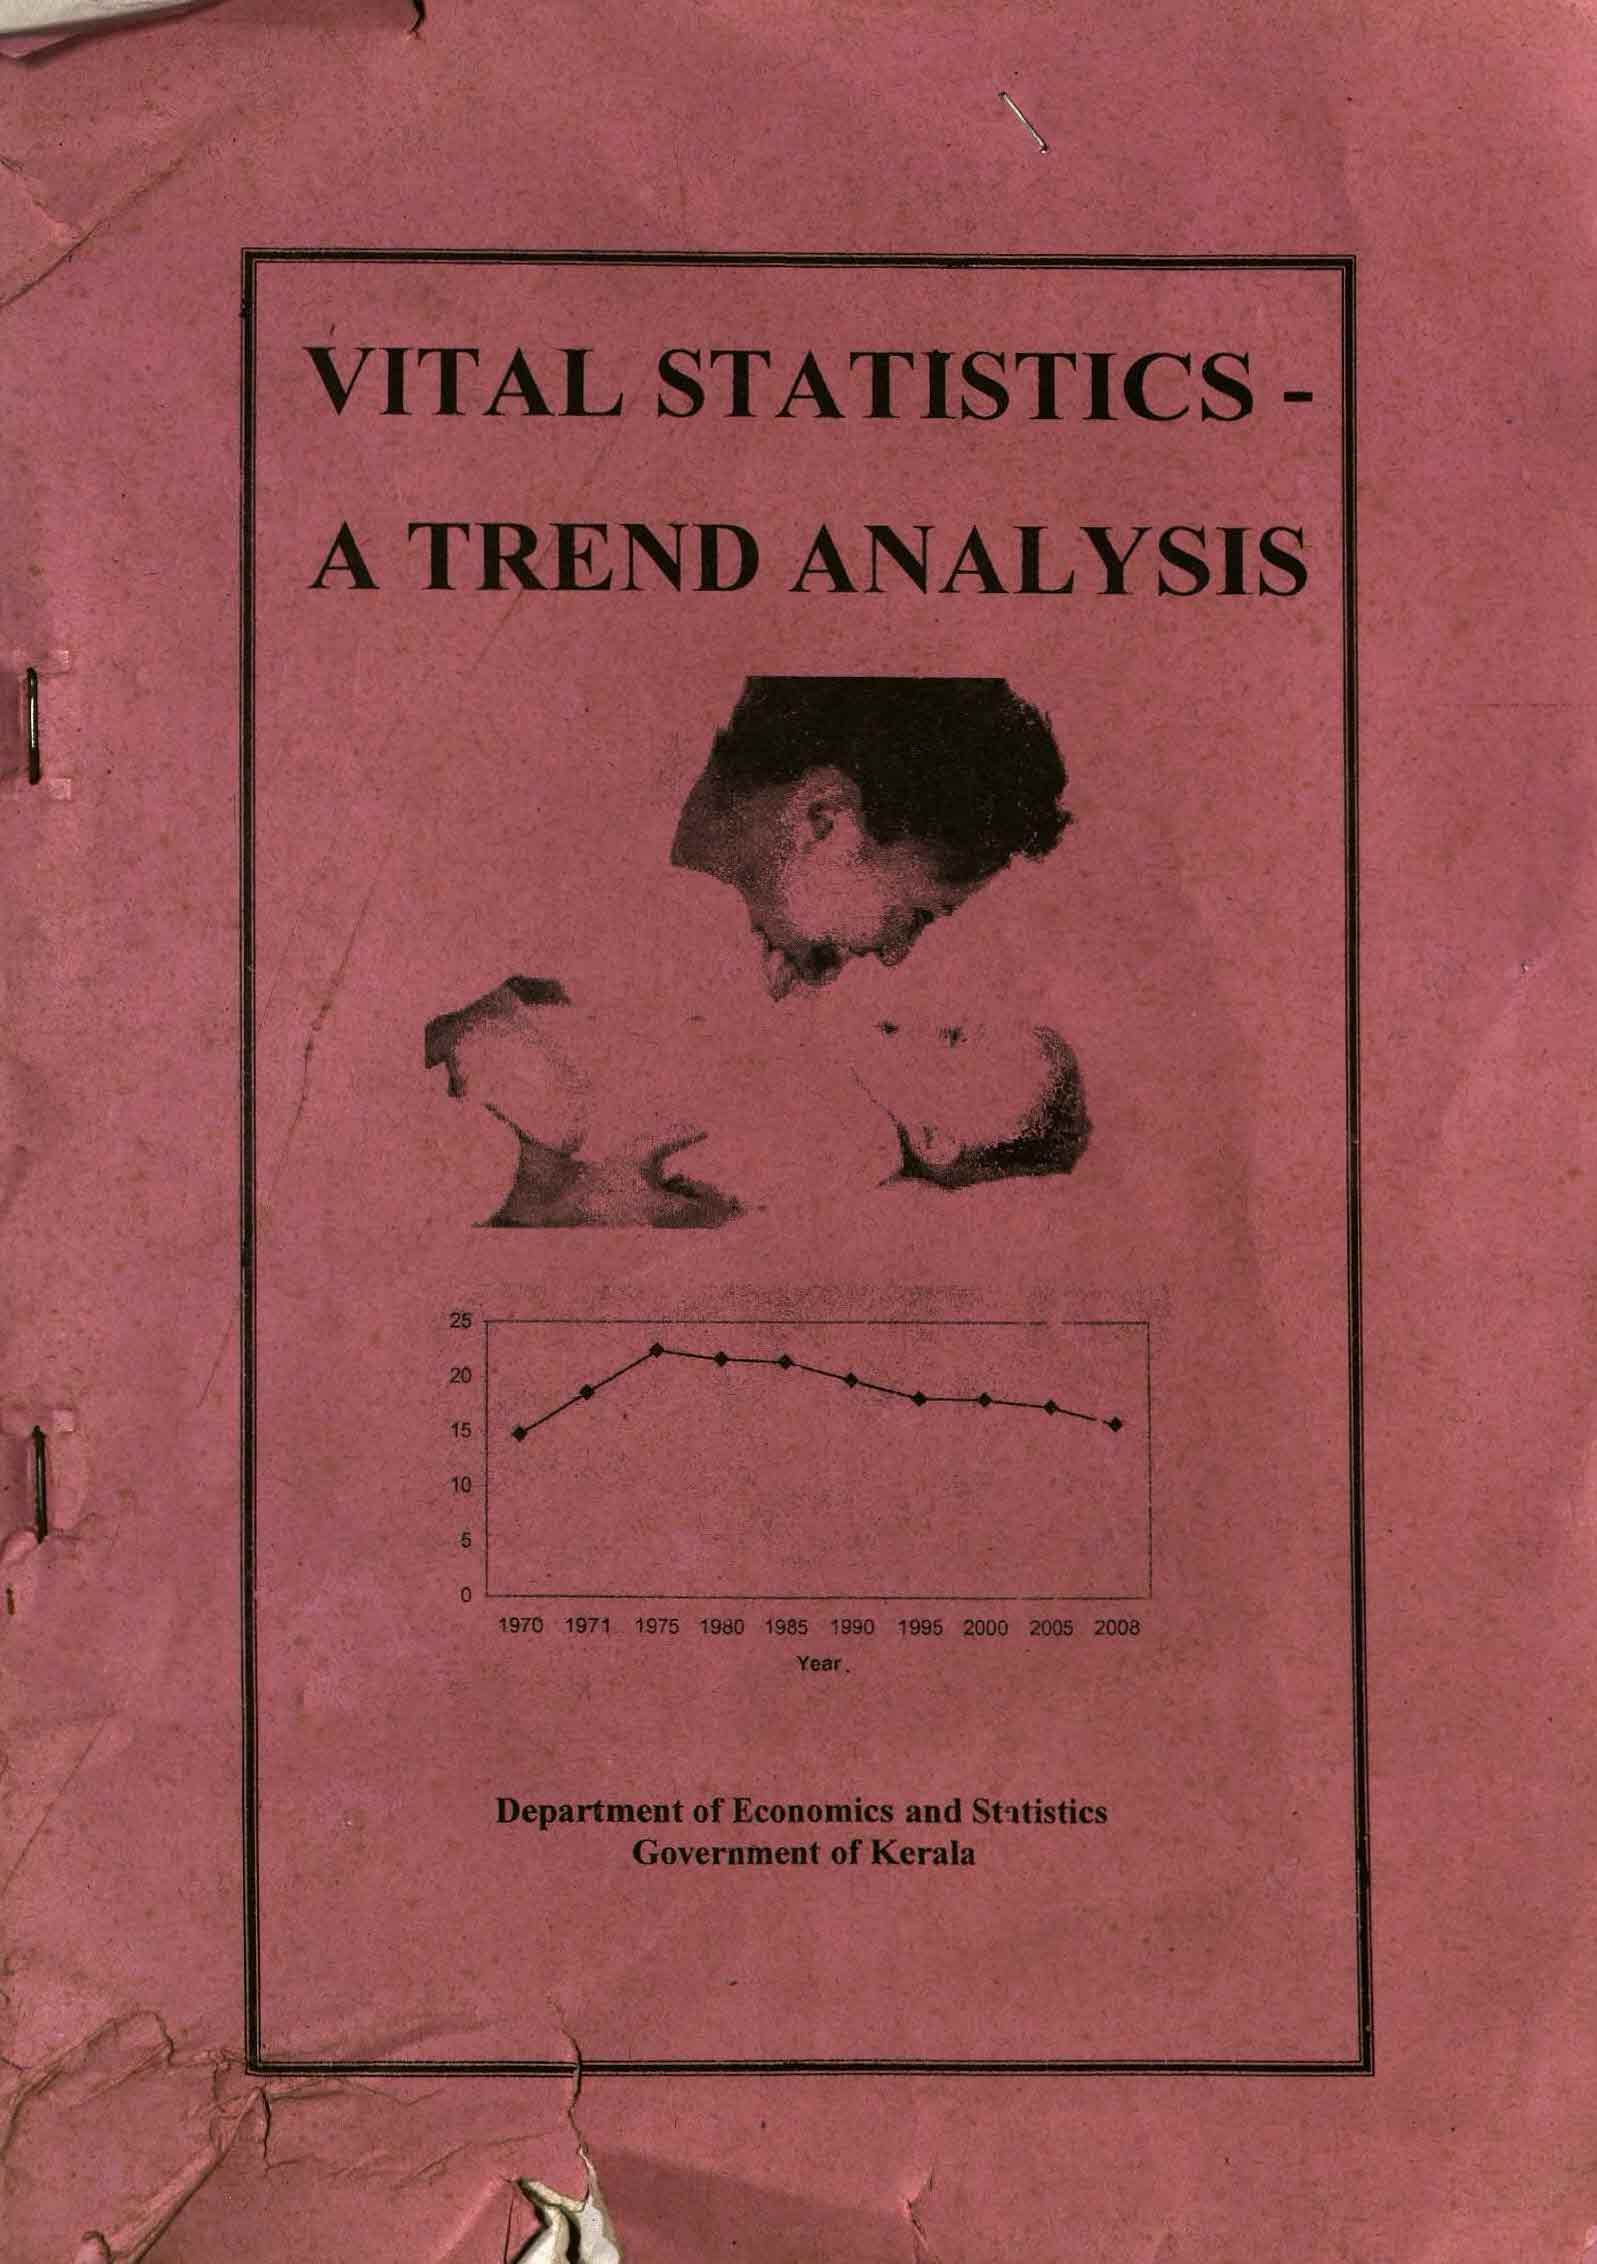 Annual Vital Statistics - A Trend Analysis 1958-2008